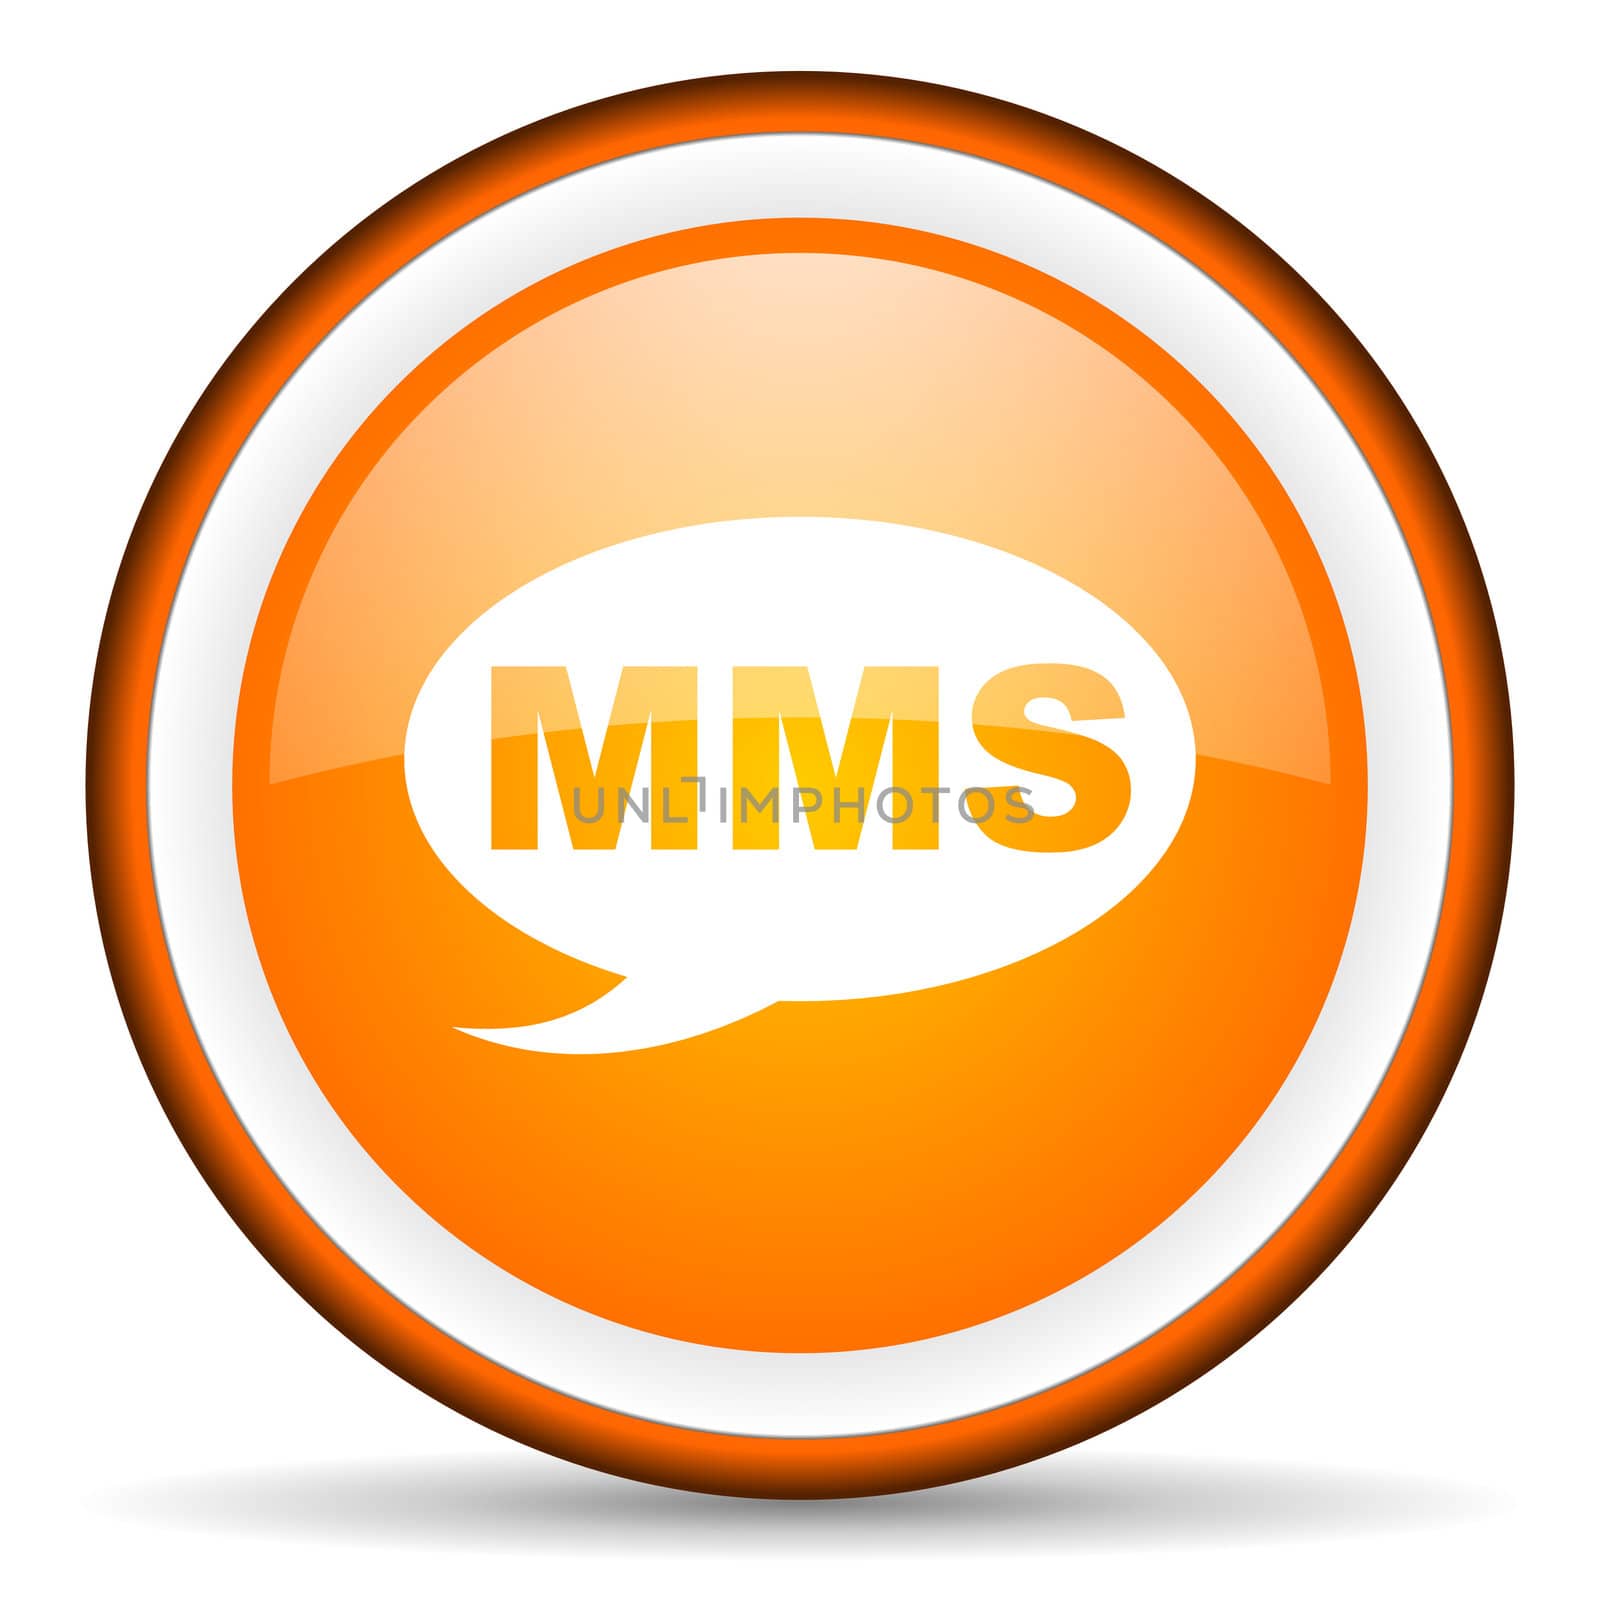 mms orange glossy circle icon on white background